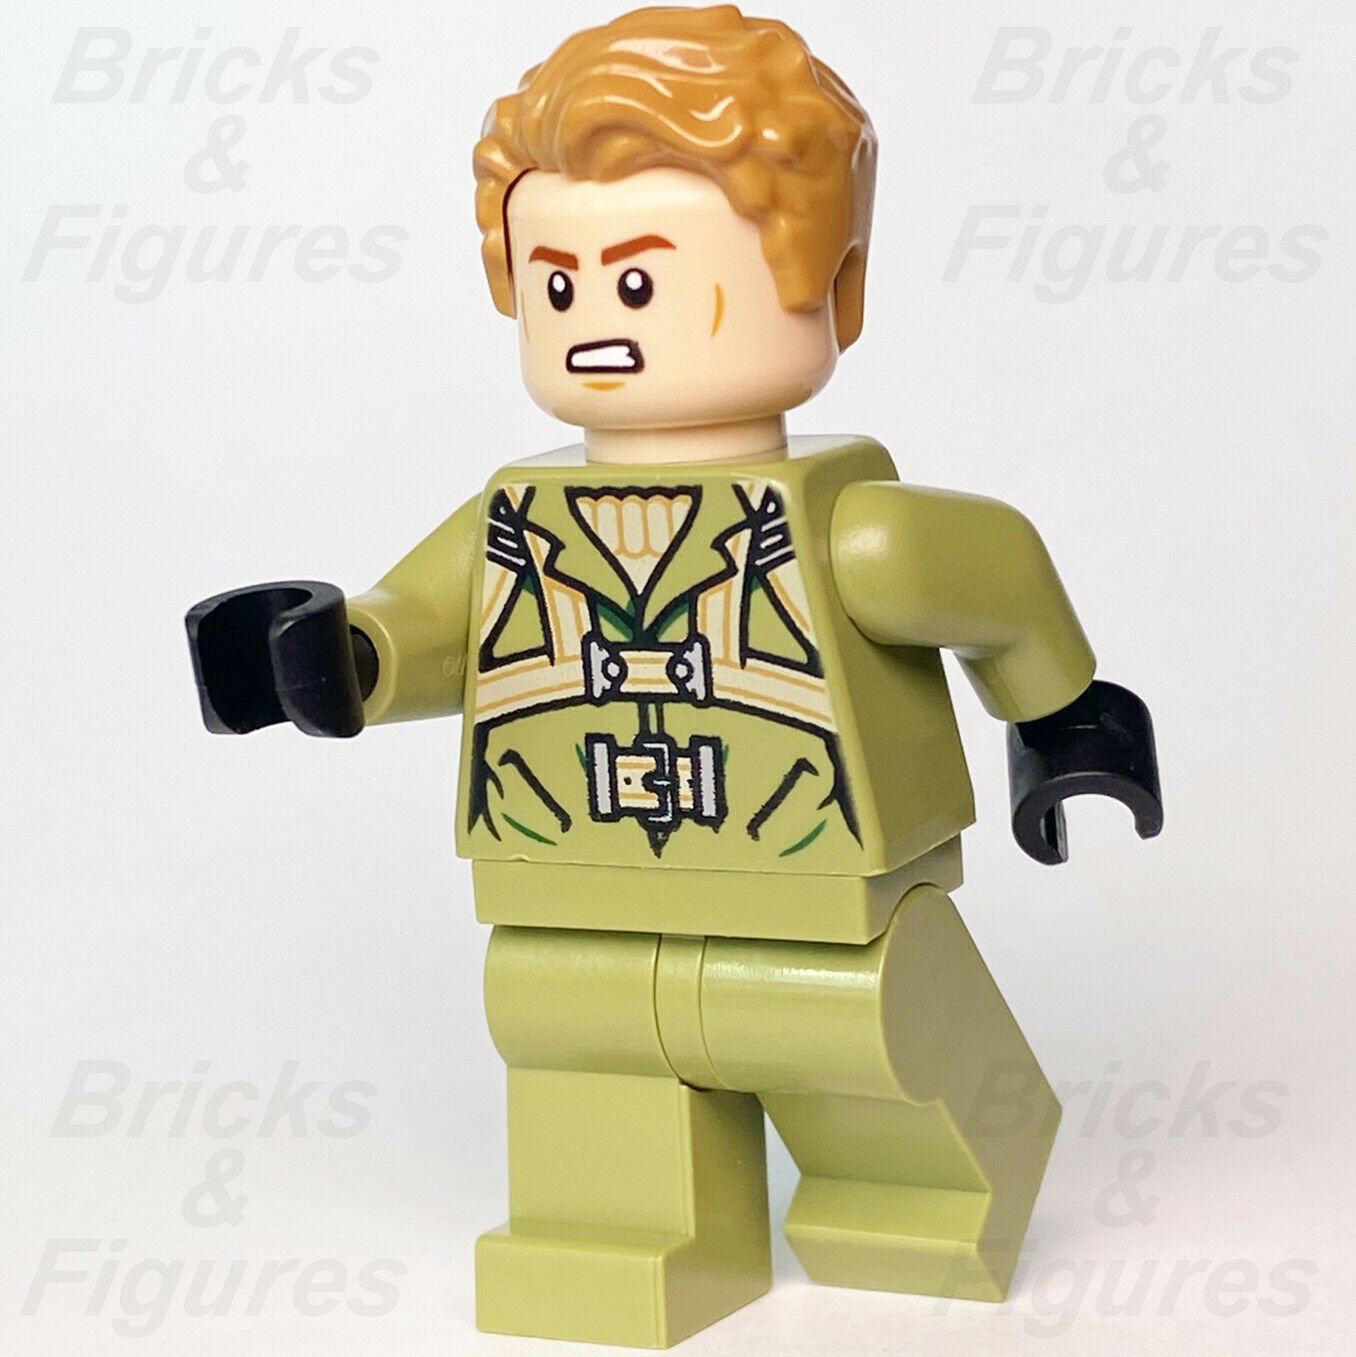 New Marvel Super Heroes LEGO Steve Rogers What If...? Minifigure 76201 sh751 - Bricks & Figures